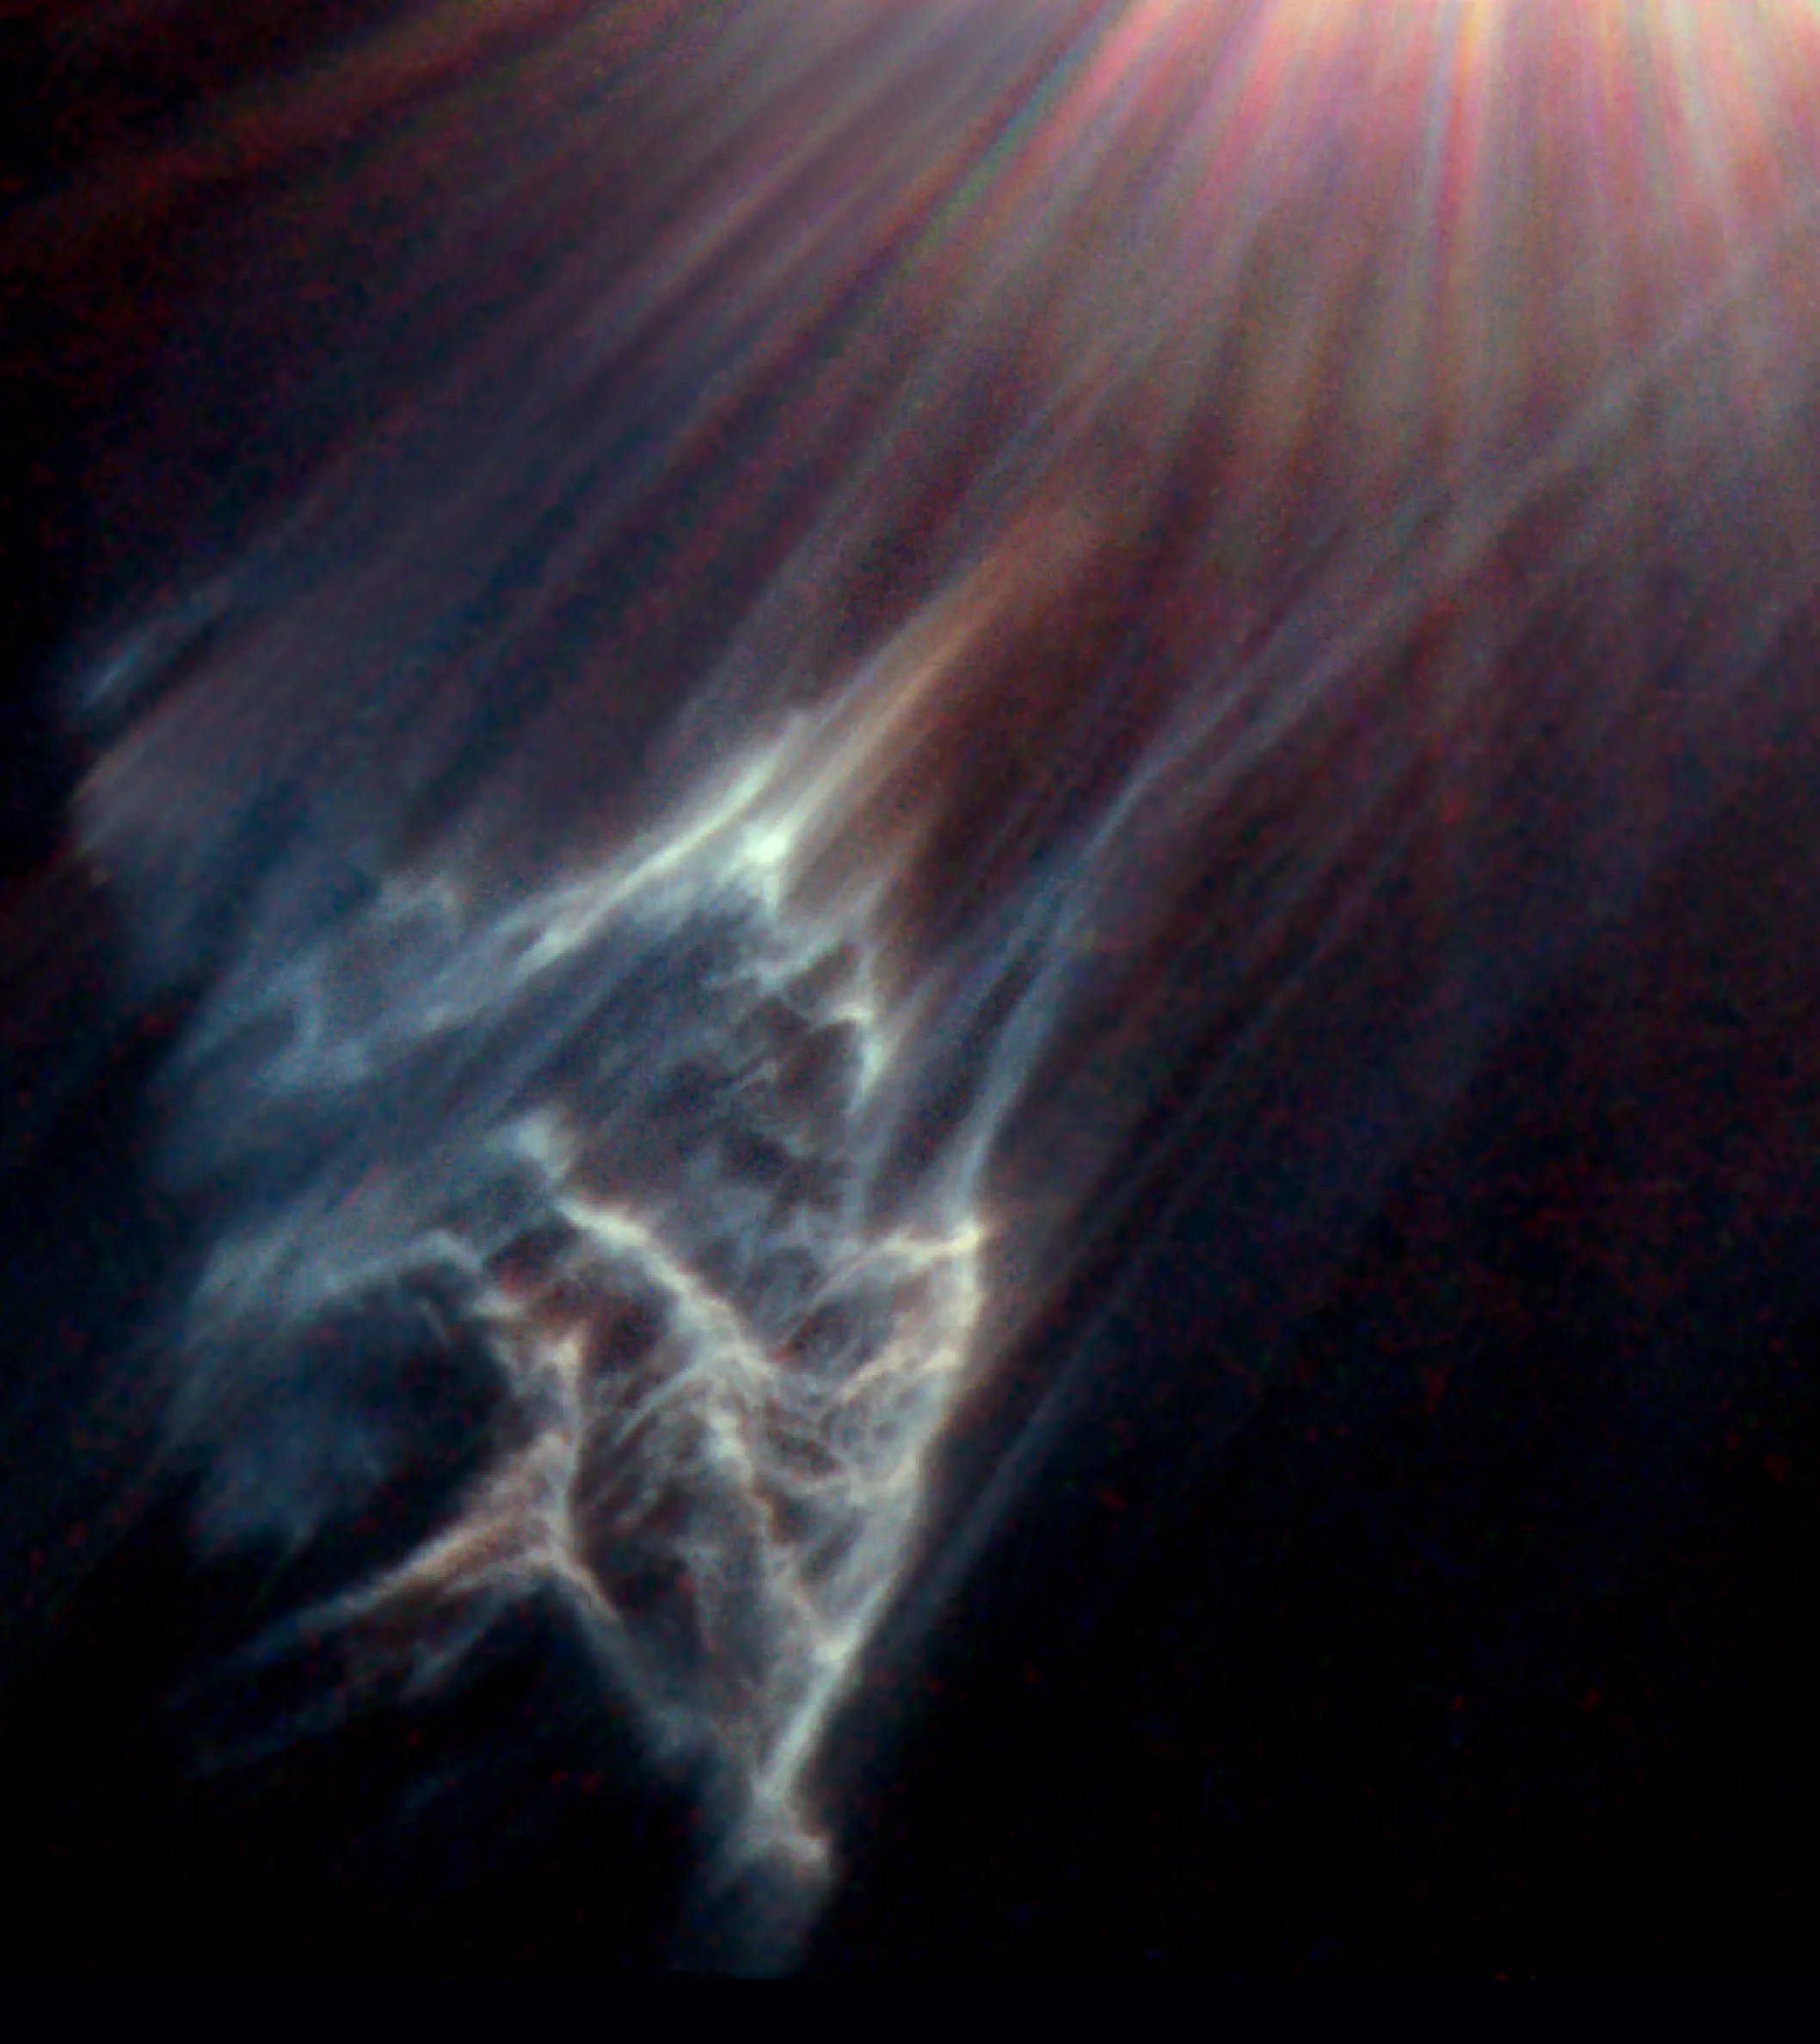 interstellar cloud in Pleiades